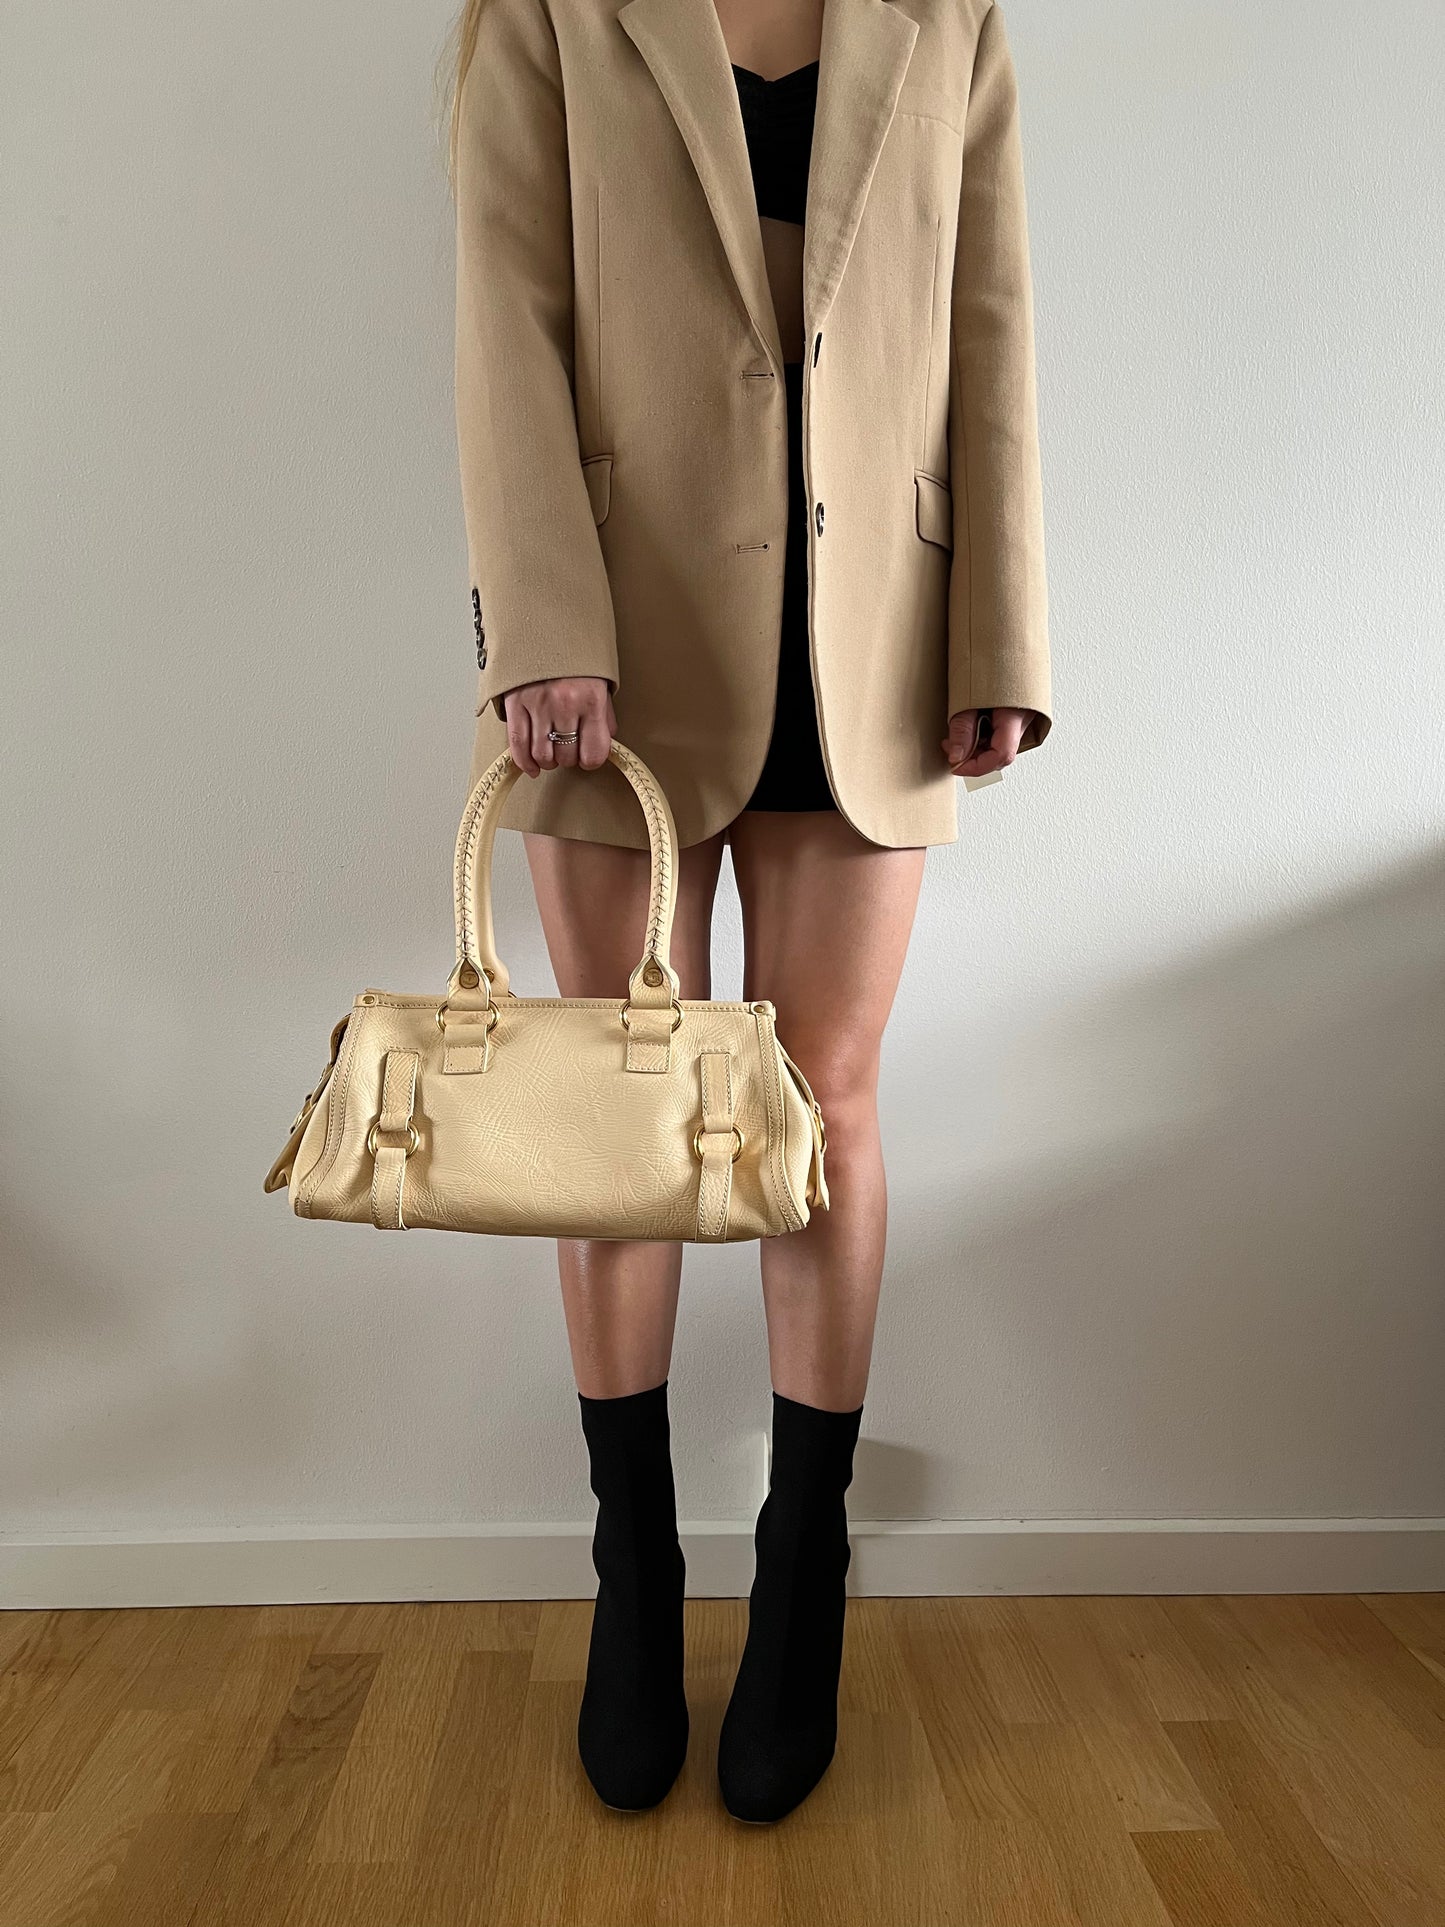 Celine beige leather handbag